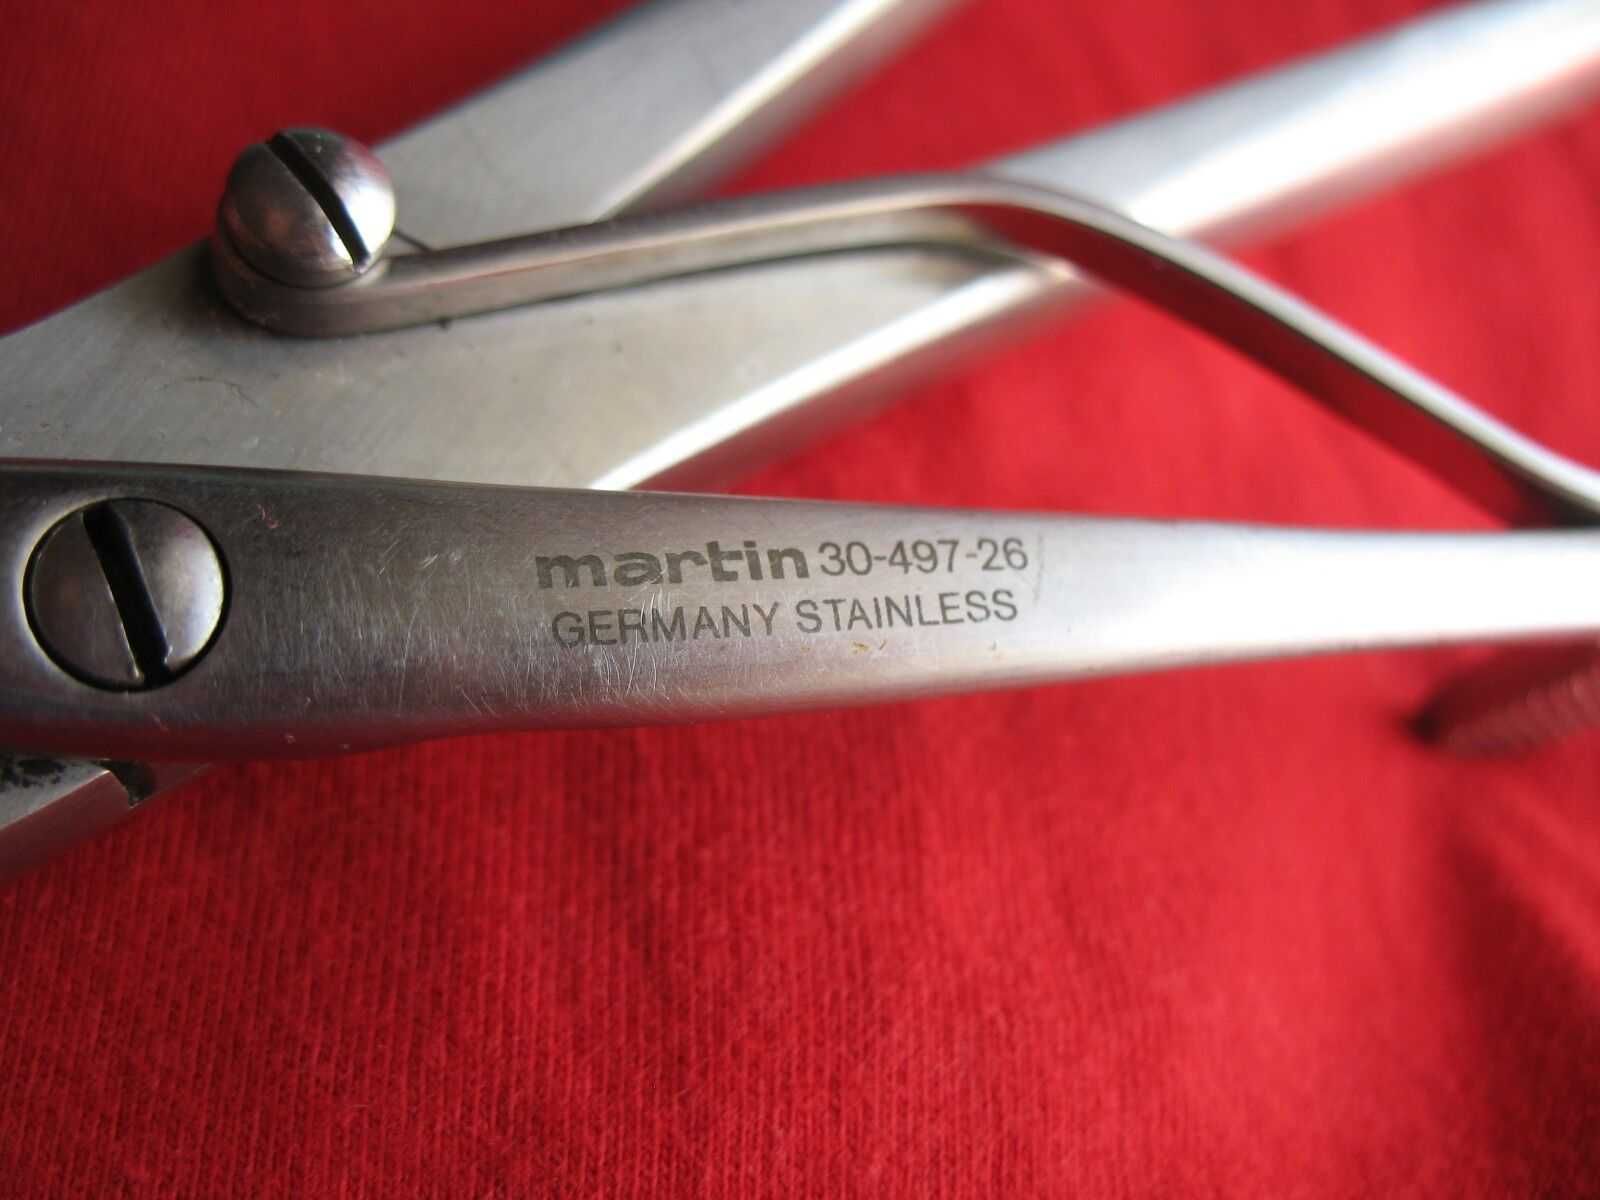 Martin 30-497-26